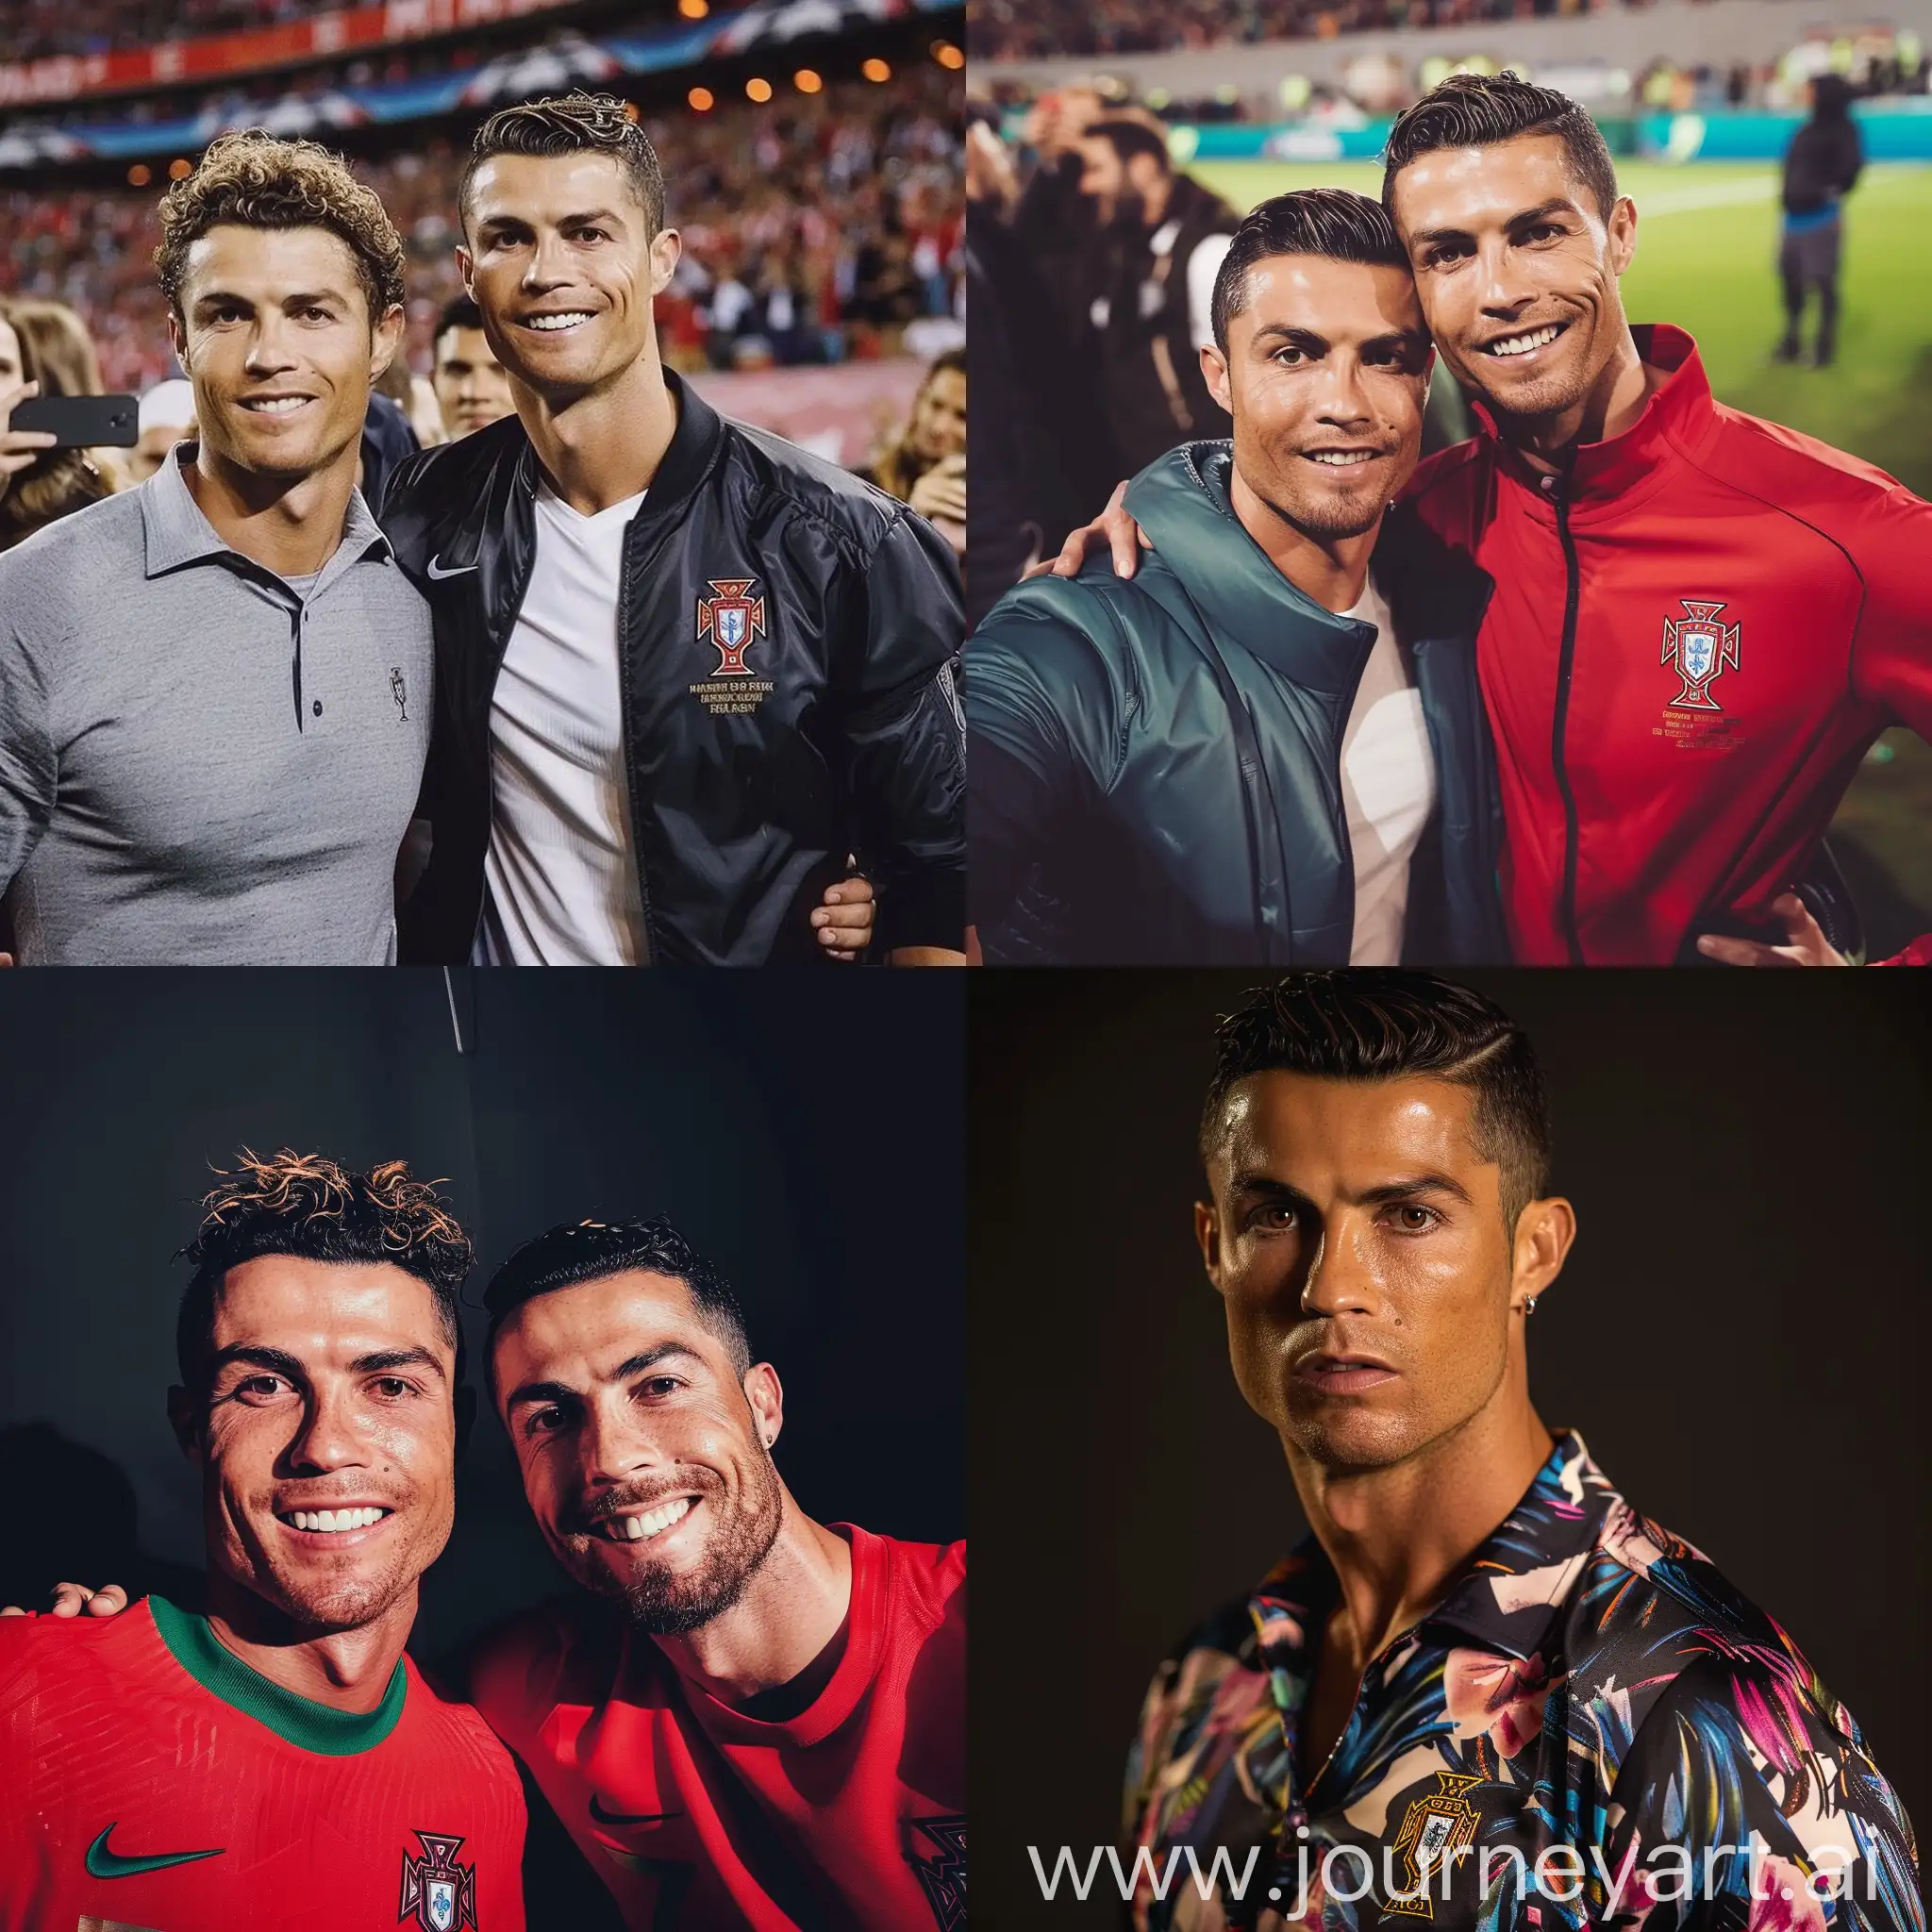 You can put my photo next to Cristiano Ronaldo